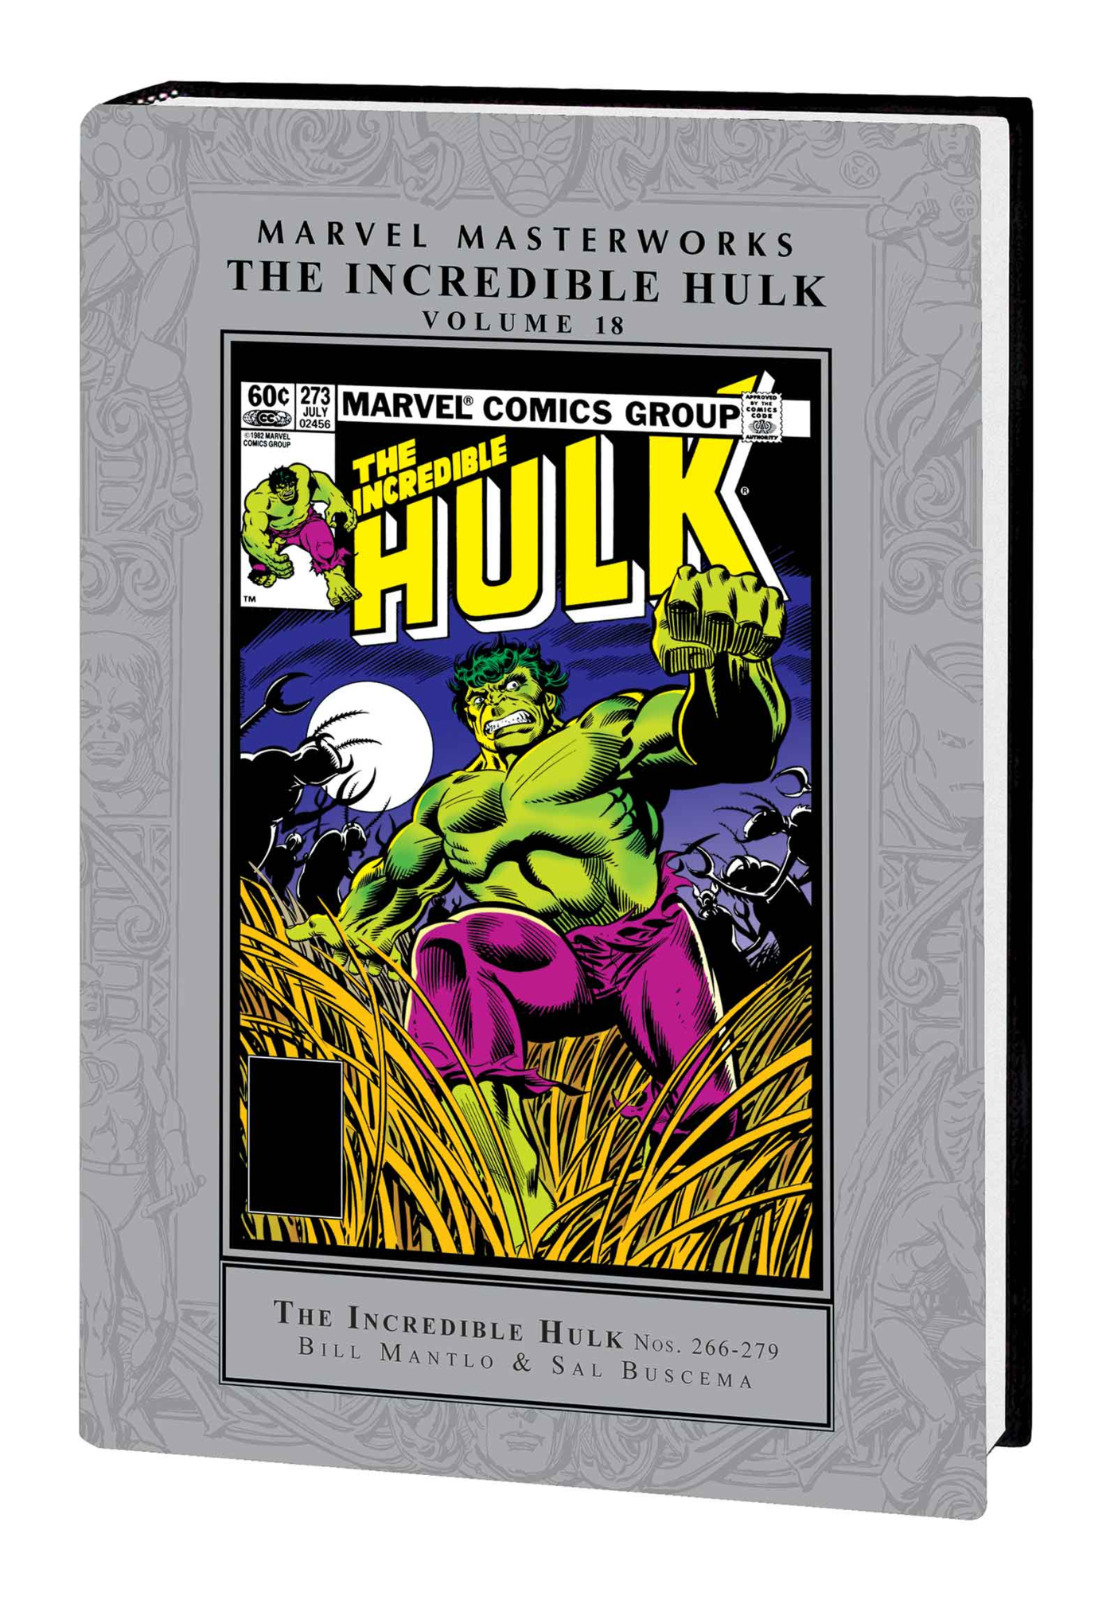 PRESALE Incredible Hulk Marvel Masterworks Vol 18 New Sealed Hardcover Comics